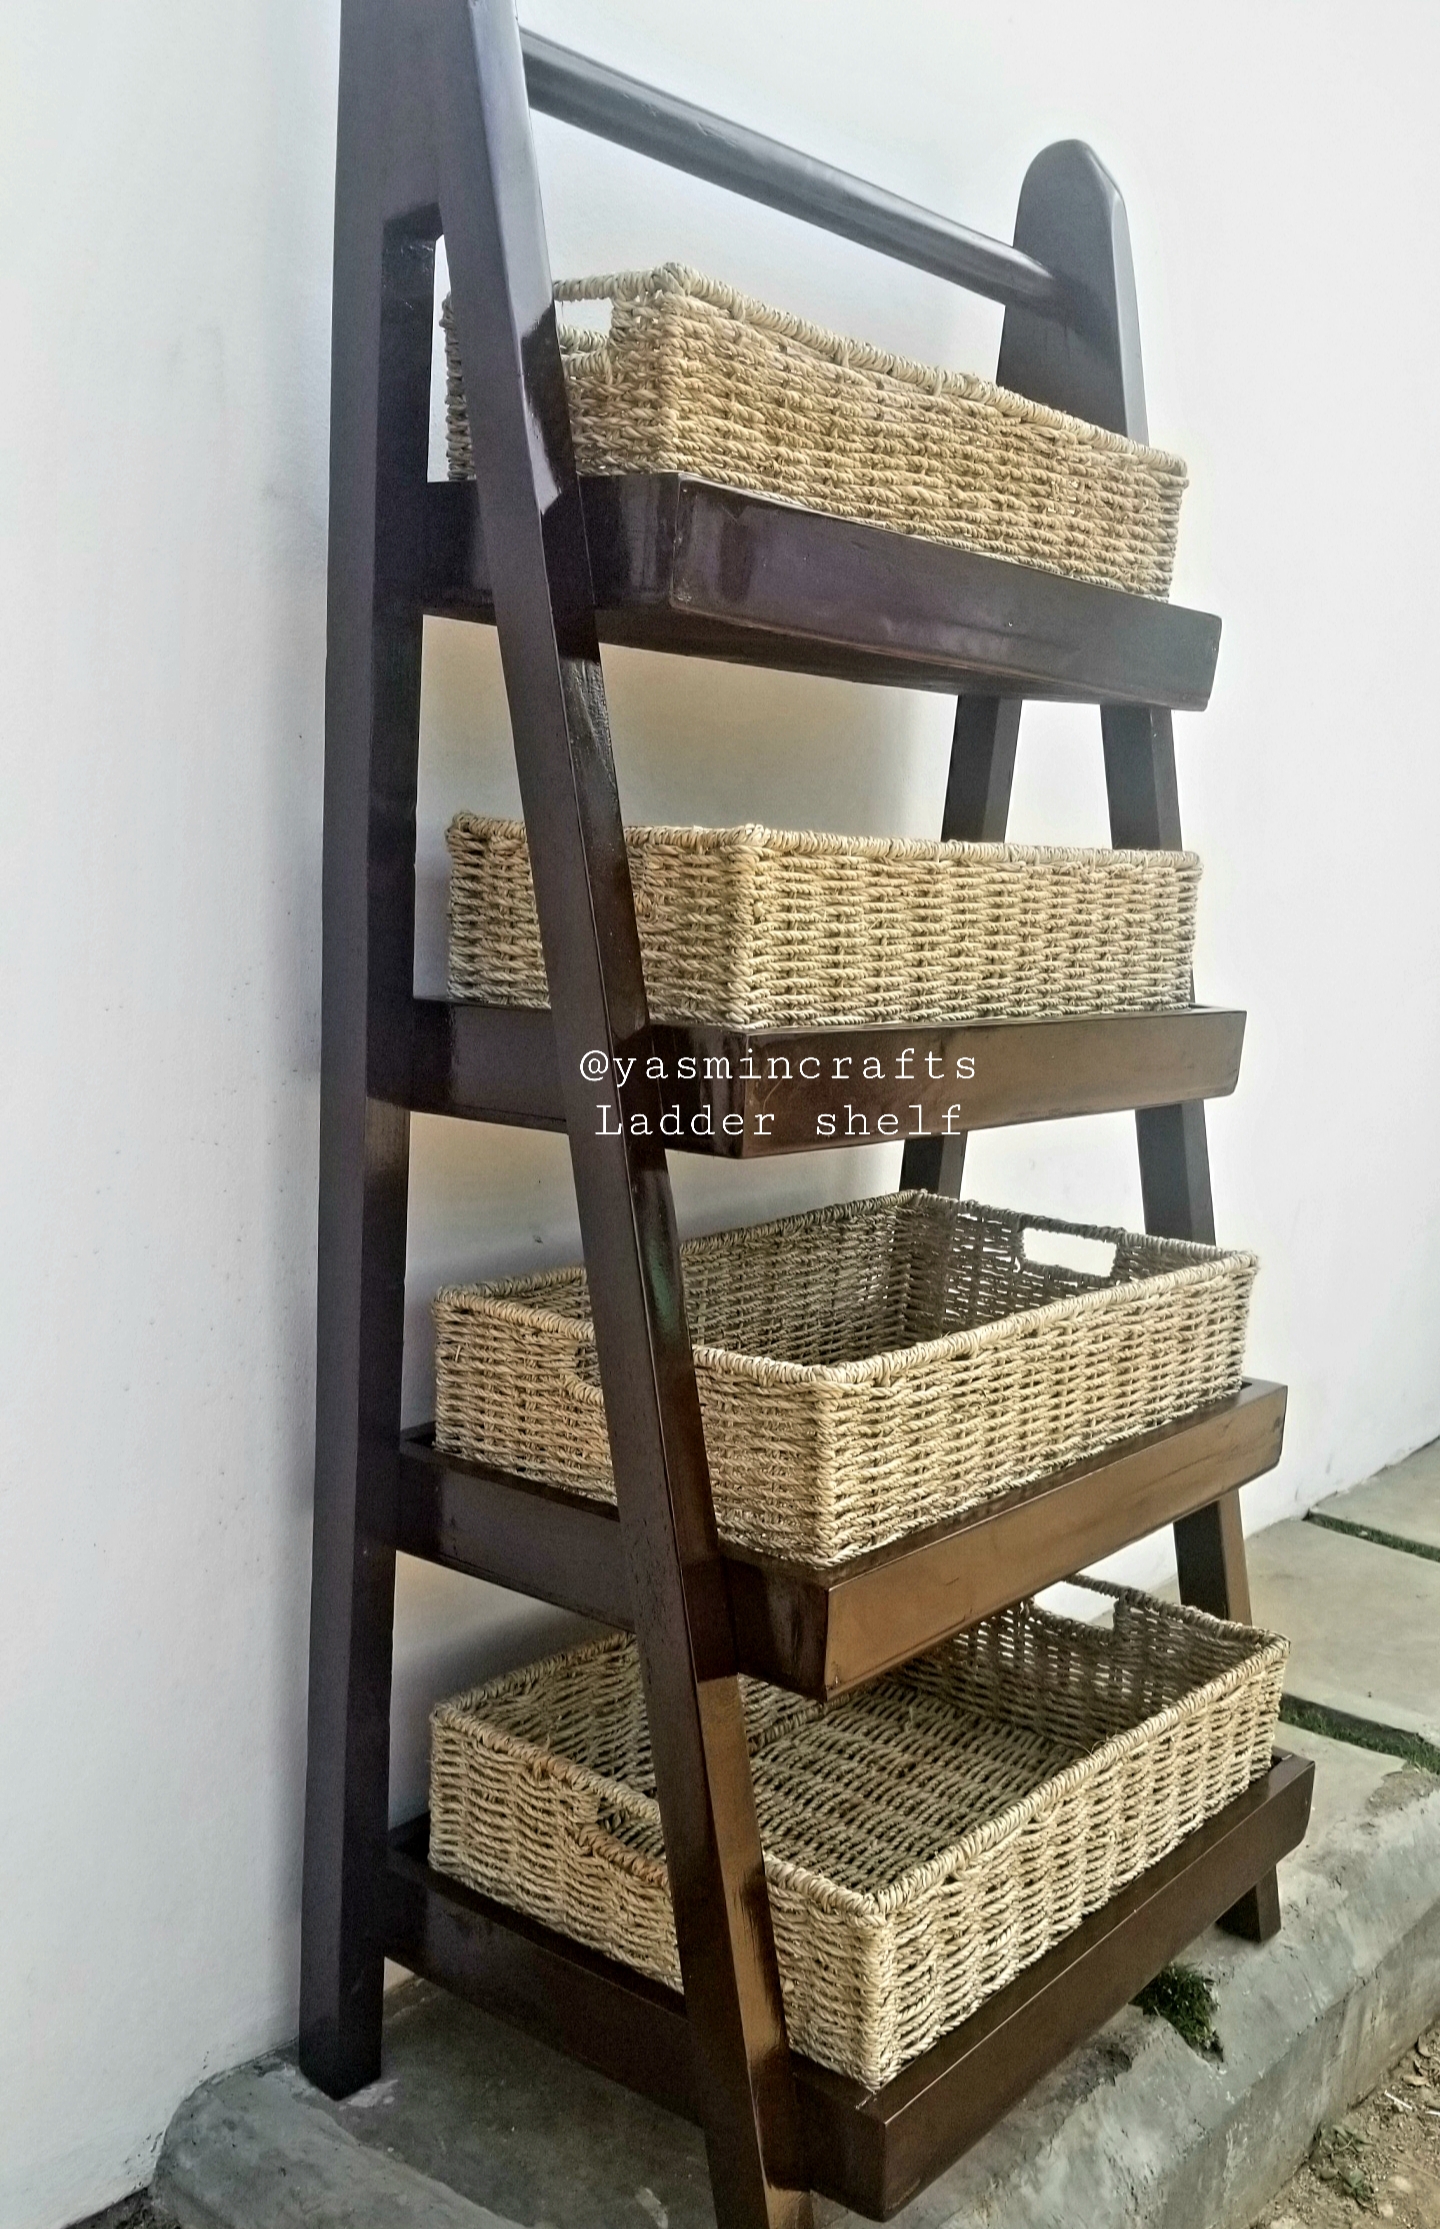 Ladder shelf, with 4 baskets by Yasmin Crafts